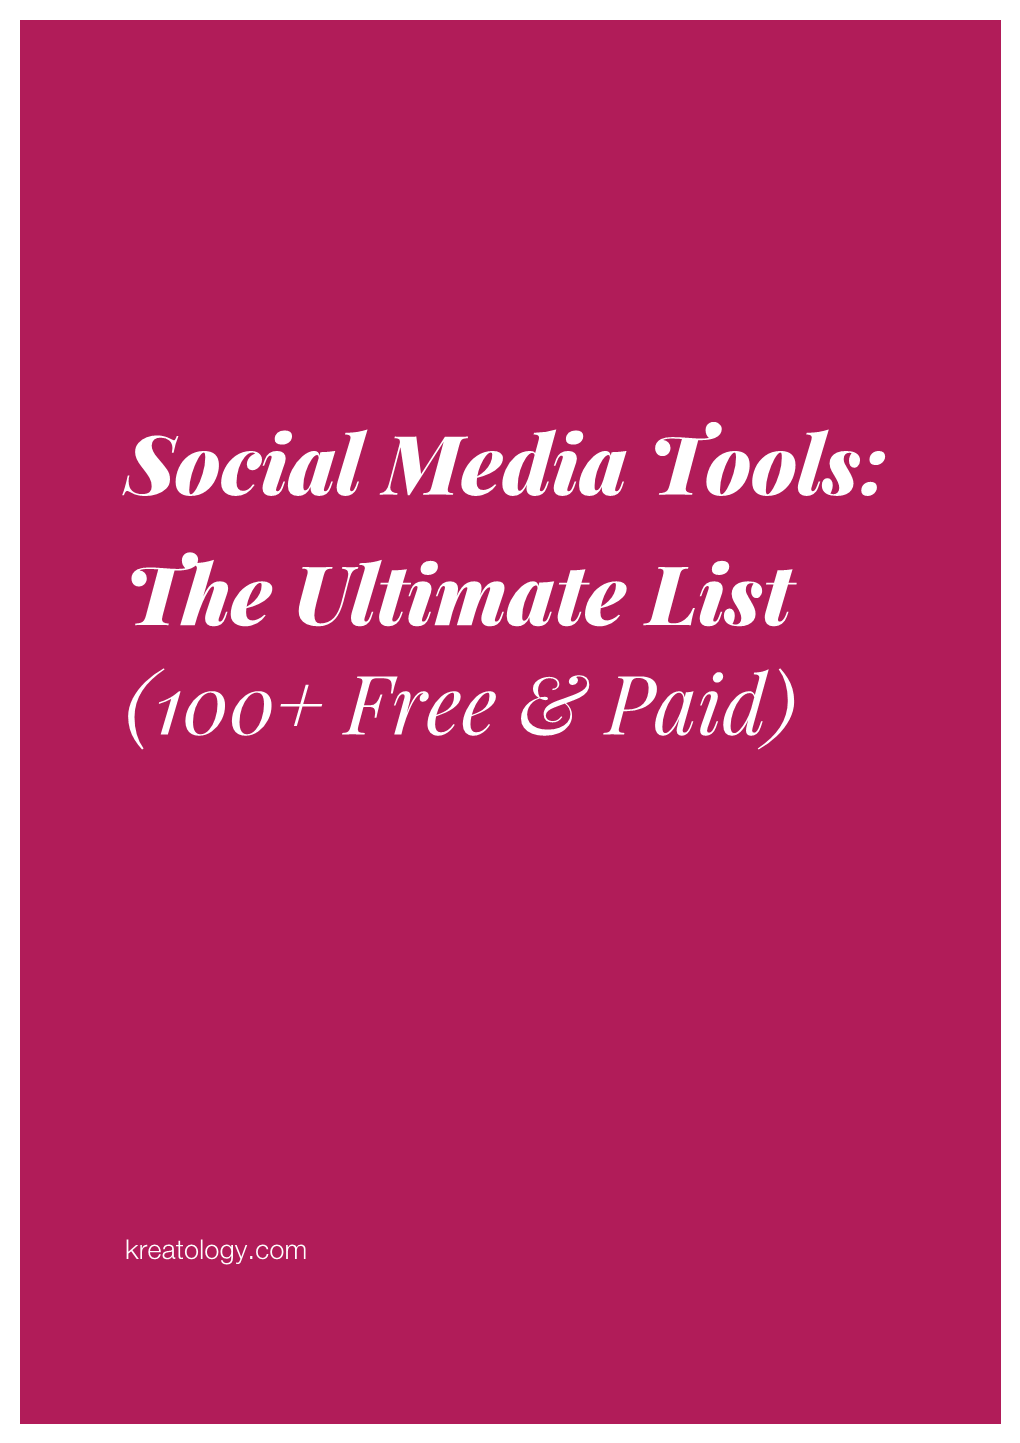 Social Media Tools: the Ultimate List (100+ Free & Paid)